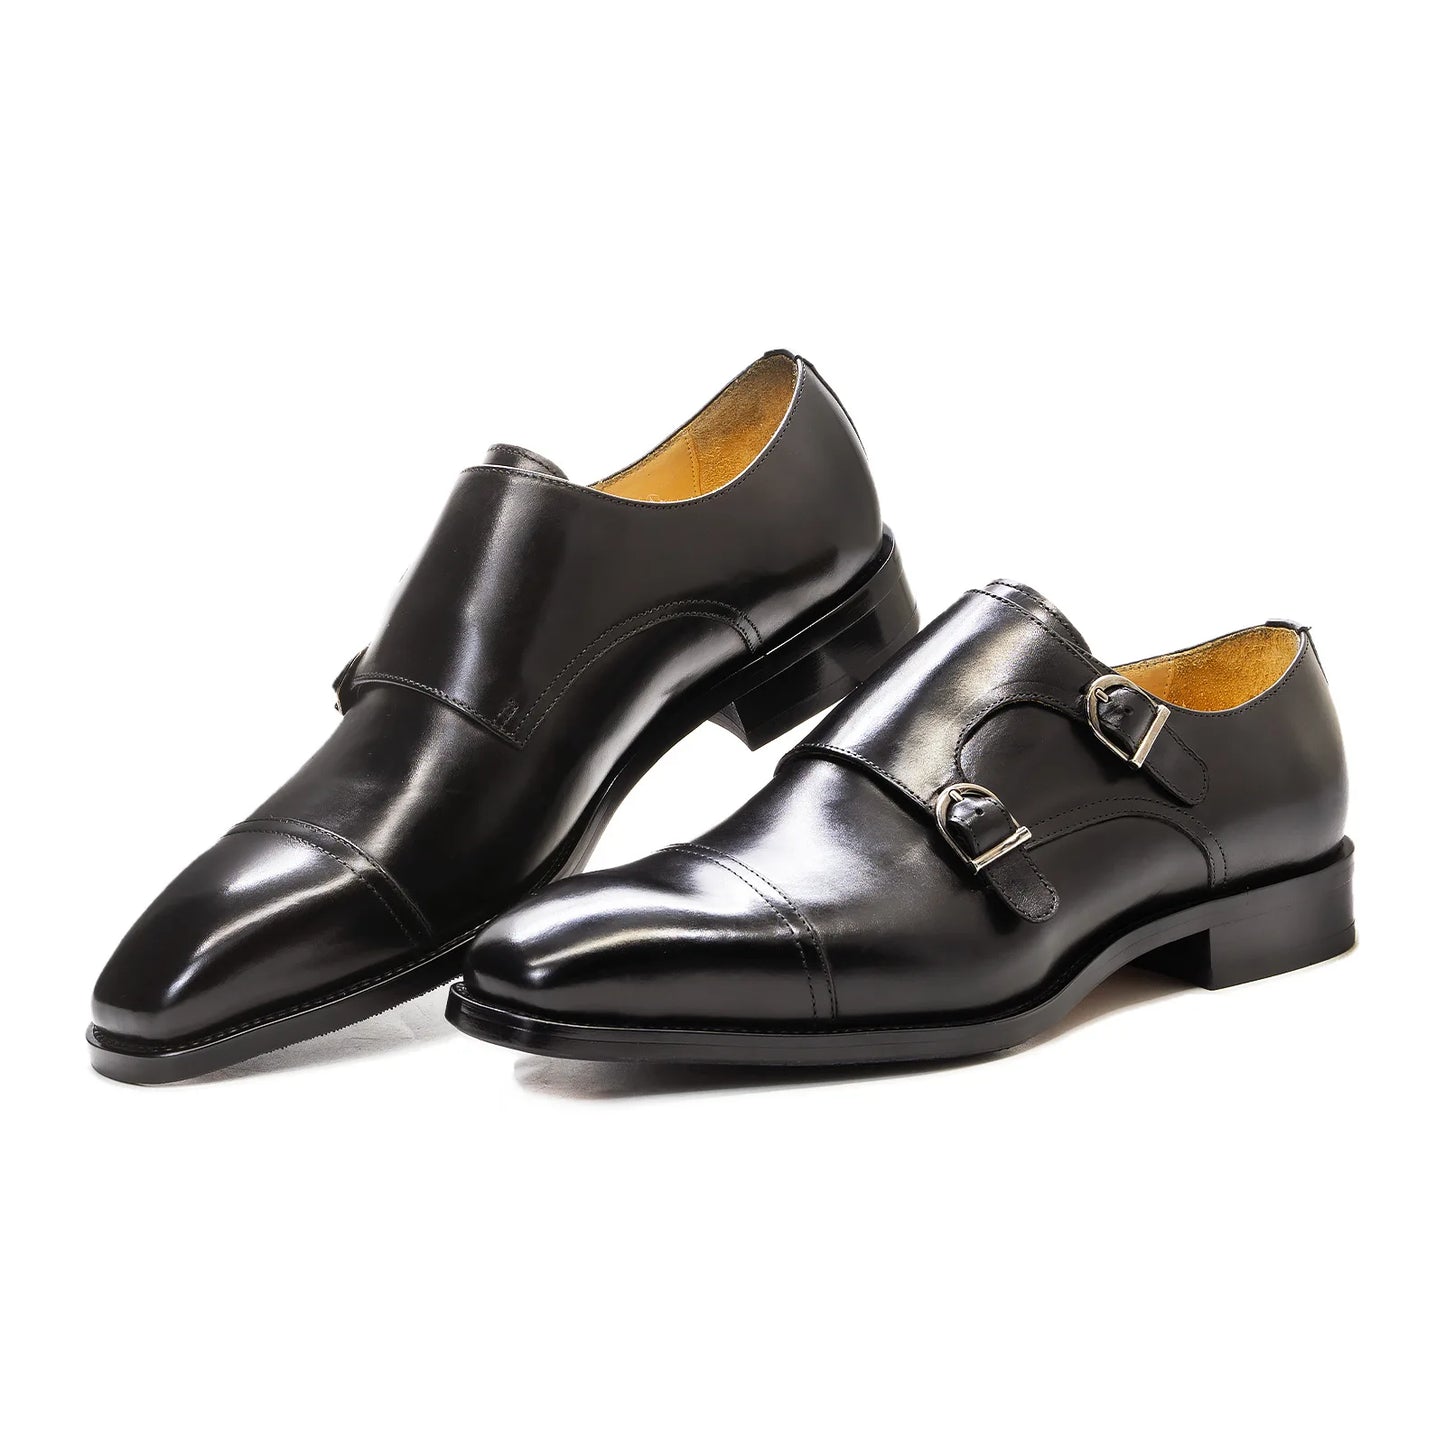 Luxury Genuine Leather Men's Dress Shoes Double Buckle Monk Strap Cap Toe Business Office Wedding Party Formal Shoes for Men